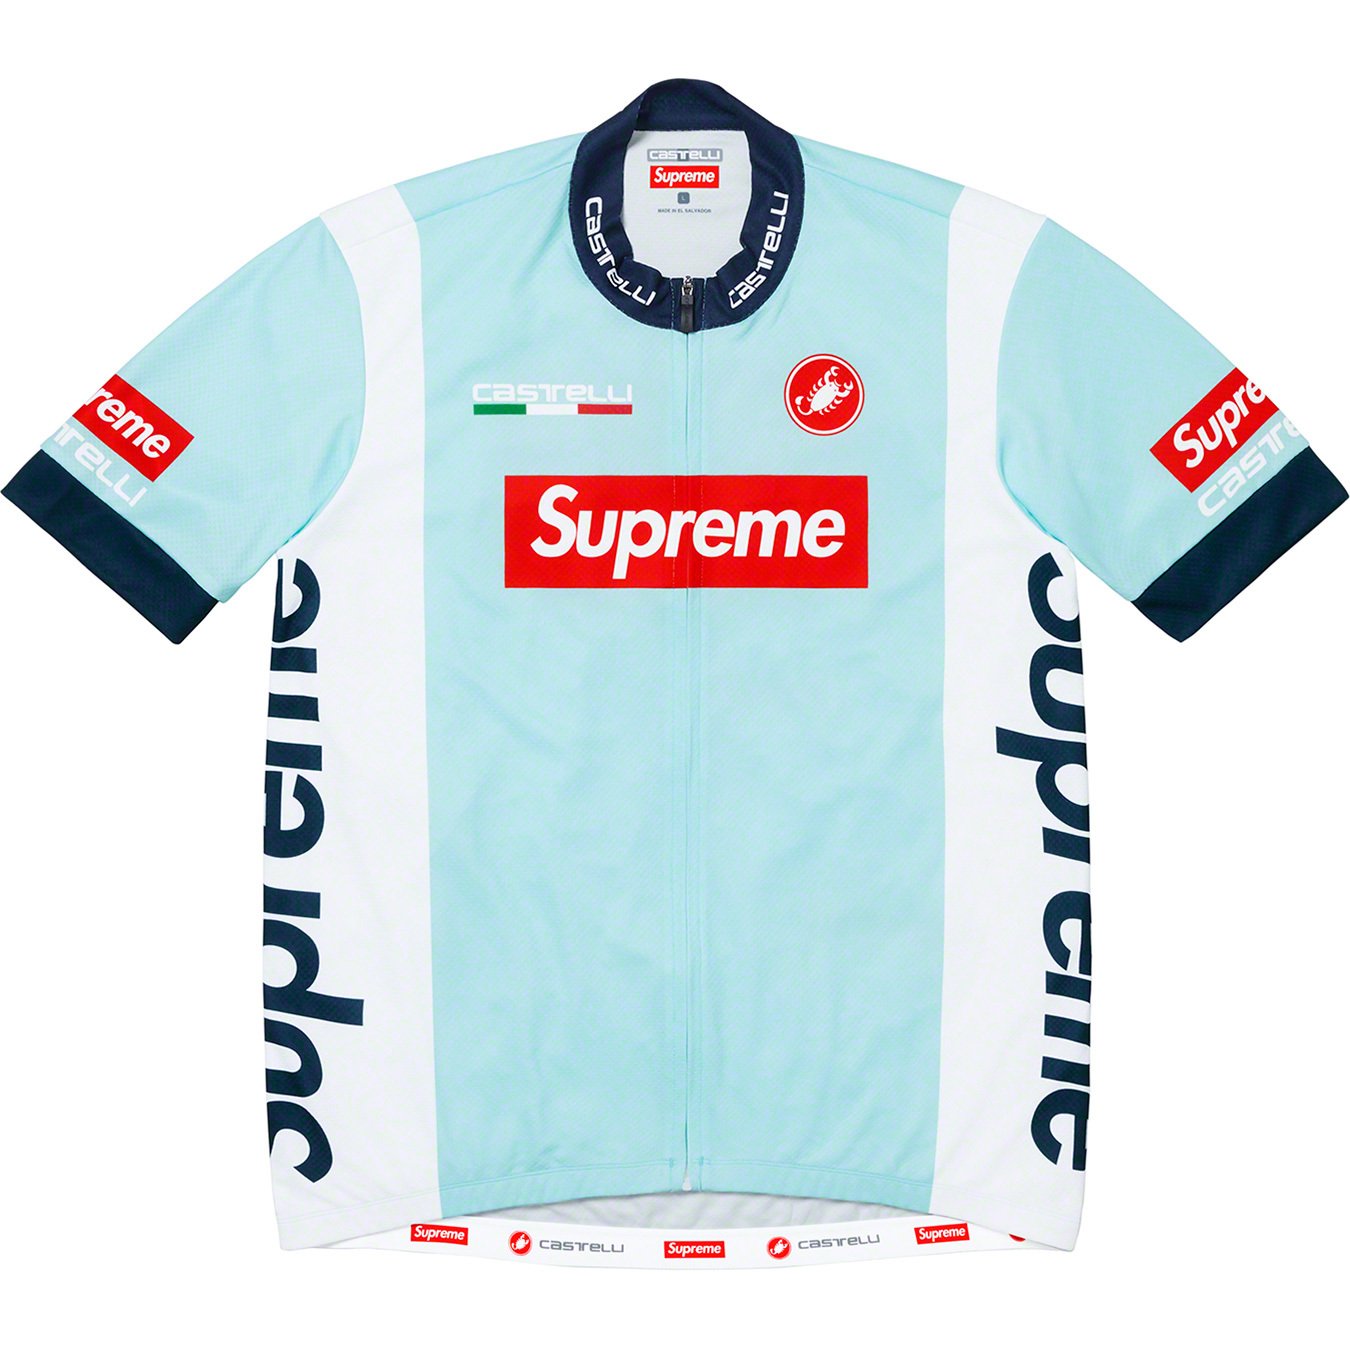 Supreme  Castelli Cycling Jersey   Mサイズ